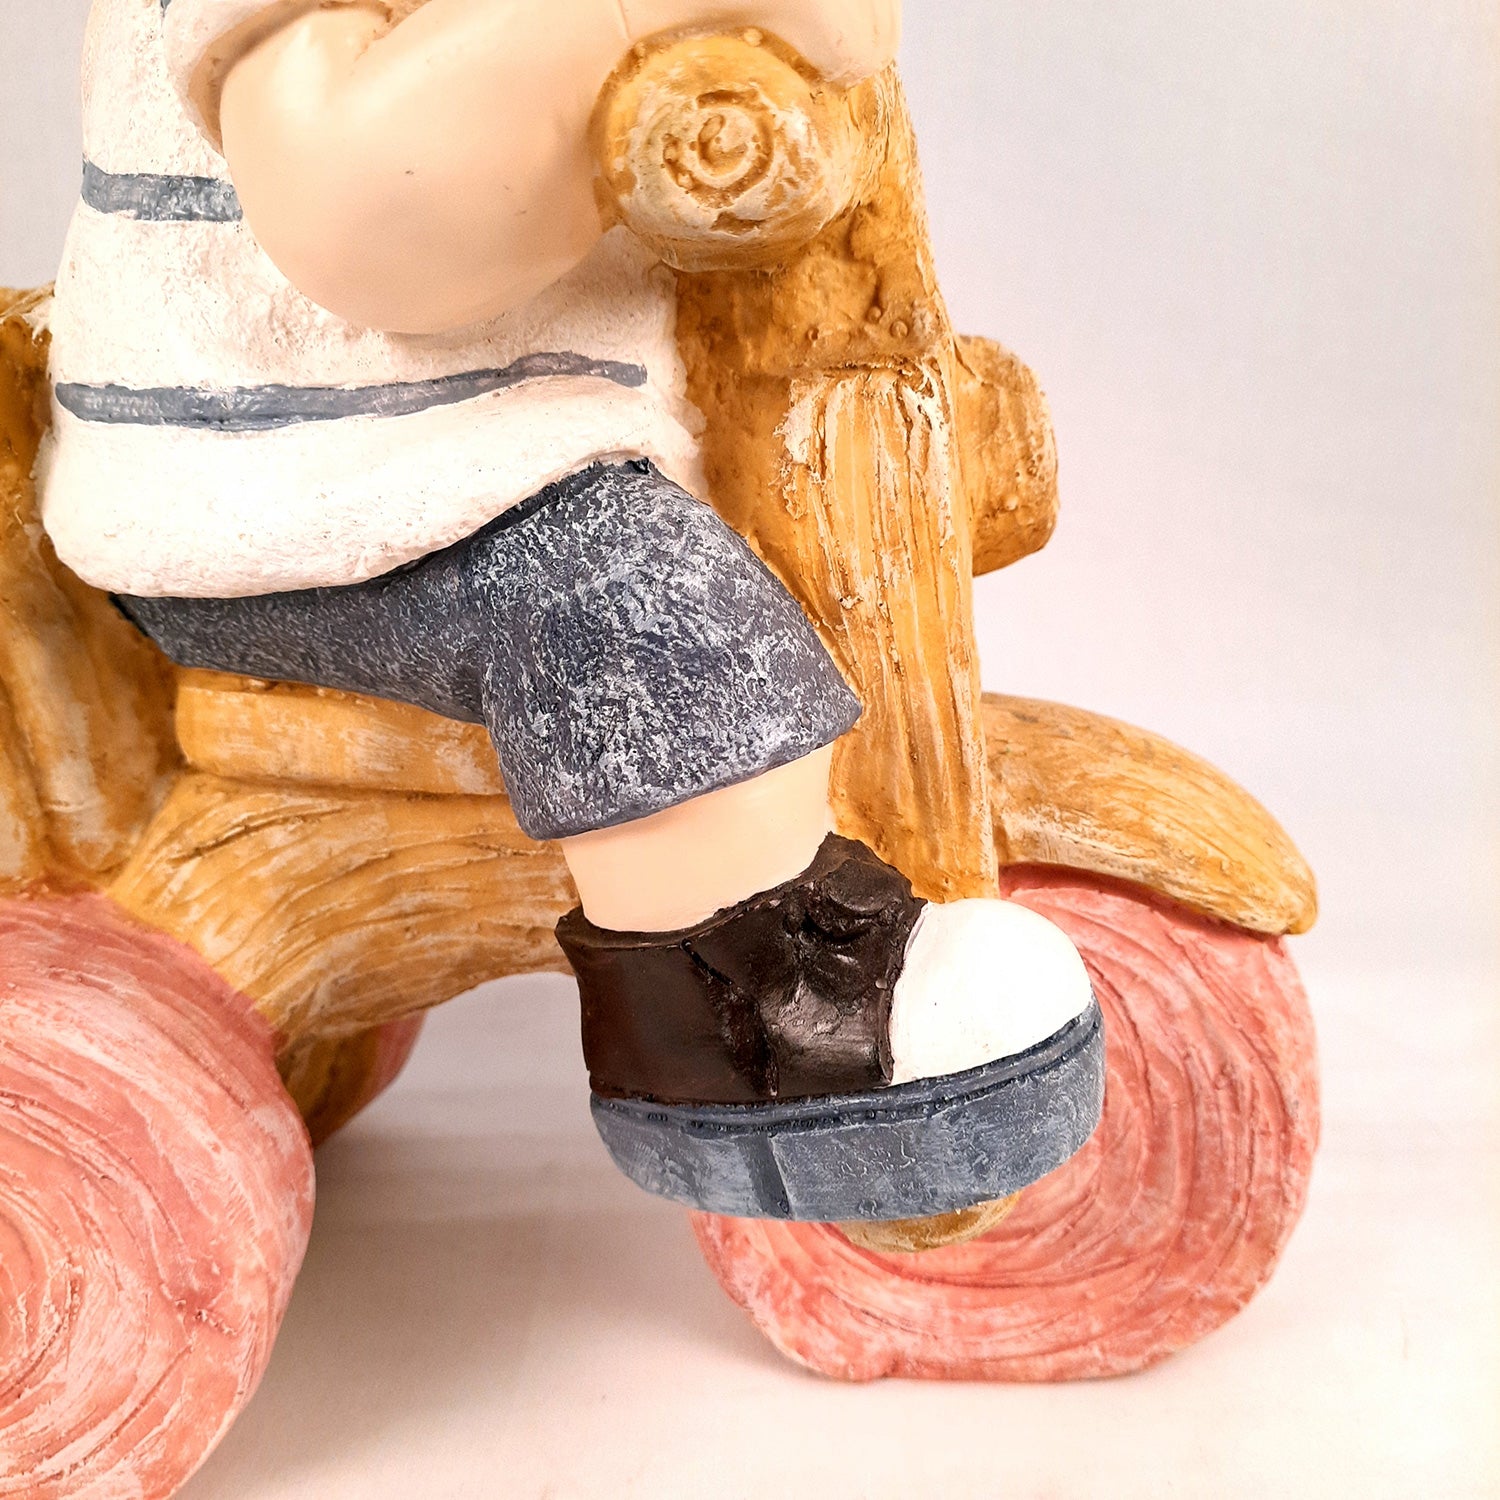 Ceramic Vase | Showpiece Cum Planter - Boy Sitting On Cycle Design - For Home, Living Room, Table Decor & Gift - 16 Inch - Apkamart